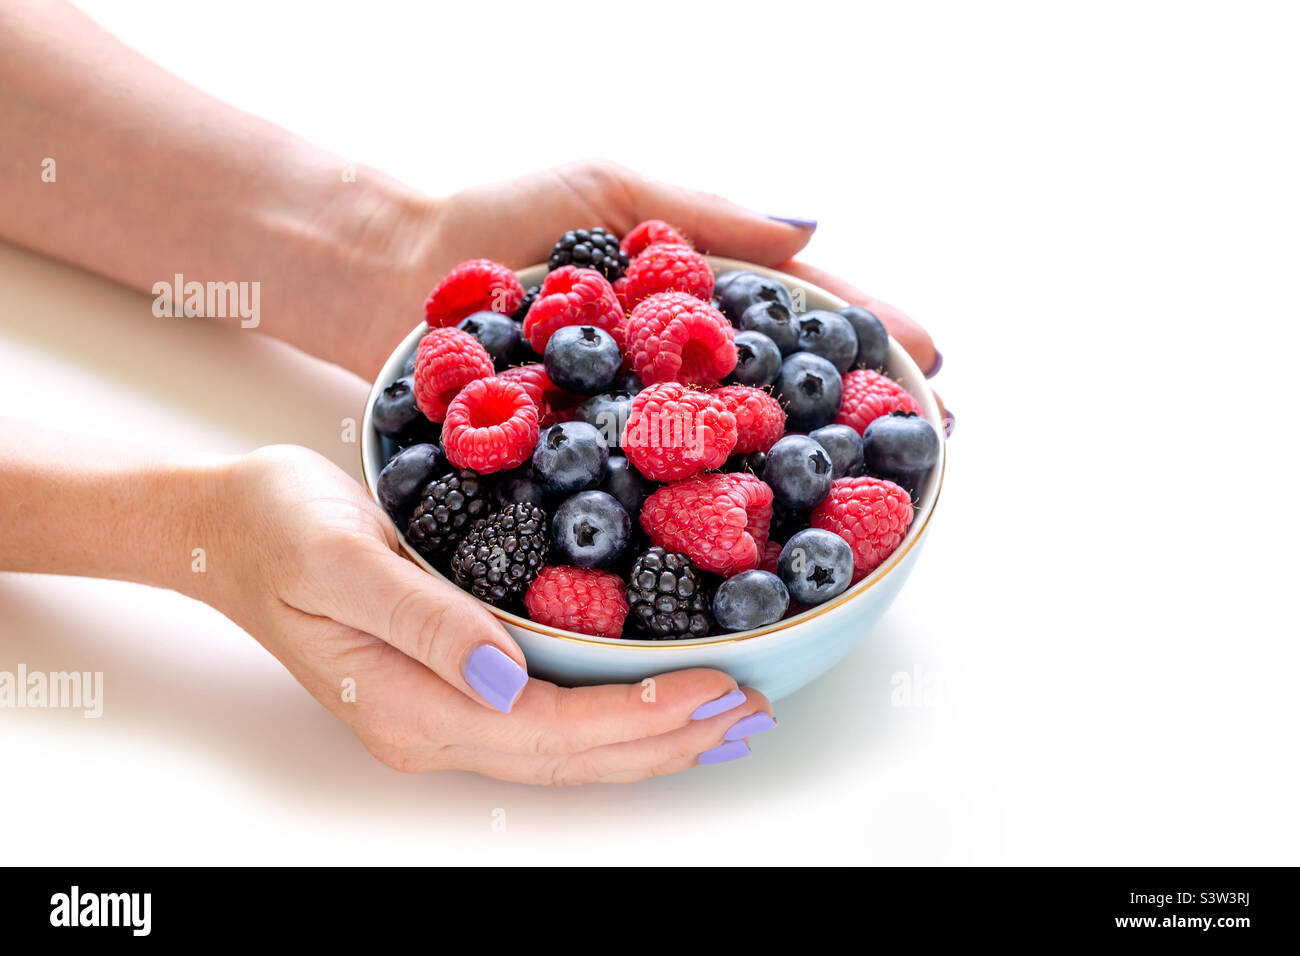 Healthy summer snack. Bowl of freshly picked berries in hands. Stock Photo